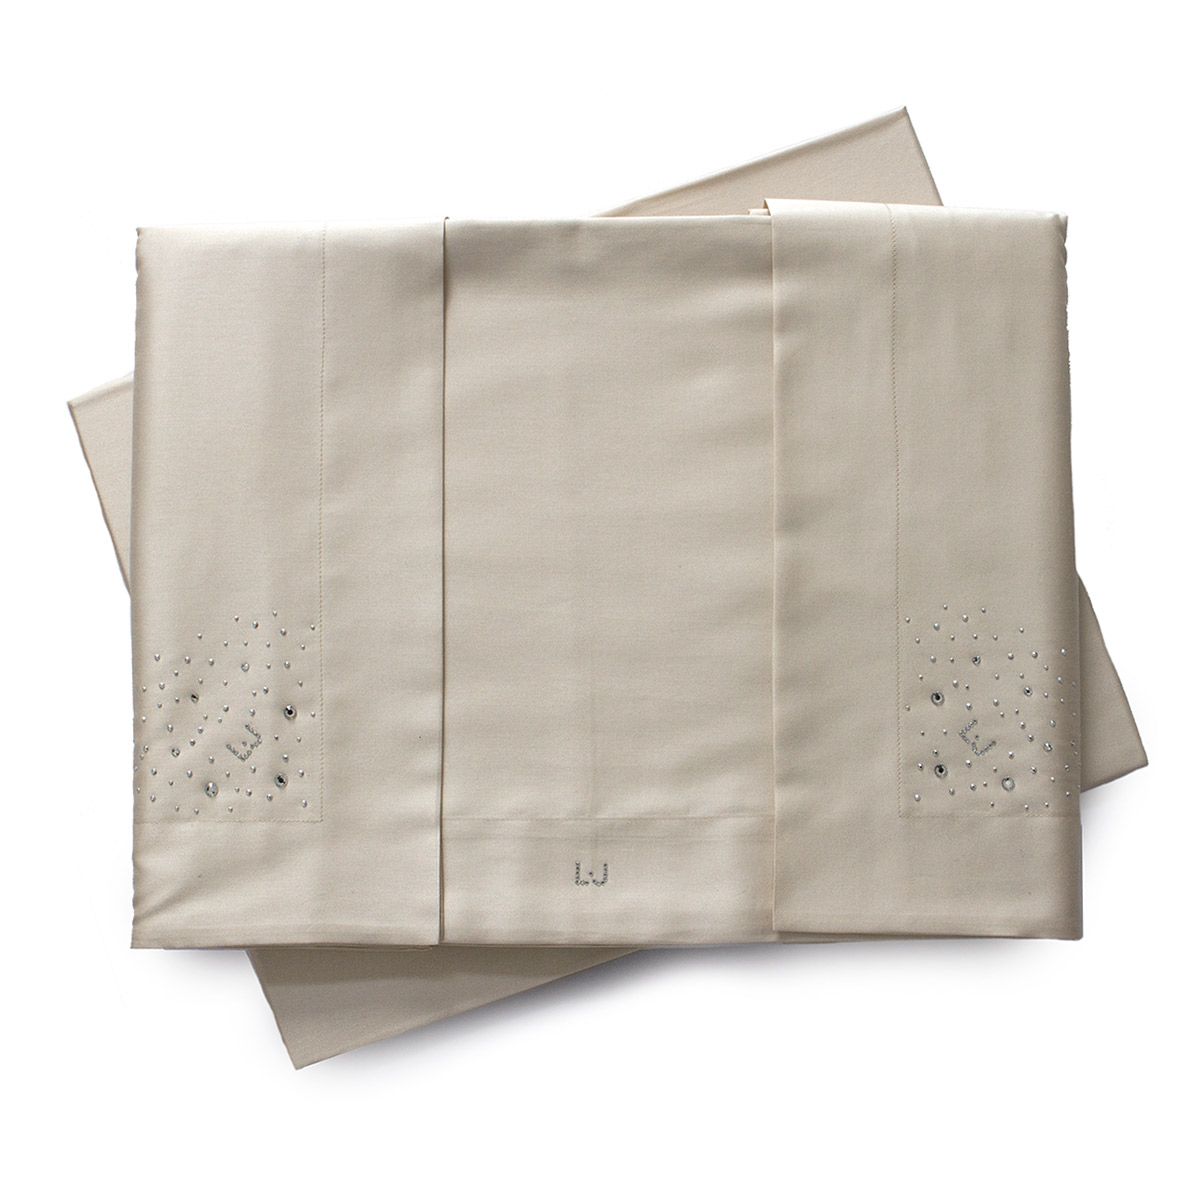 Erica Liu Jo sheets set in double cotton satin